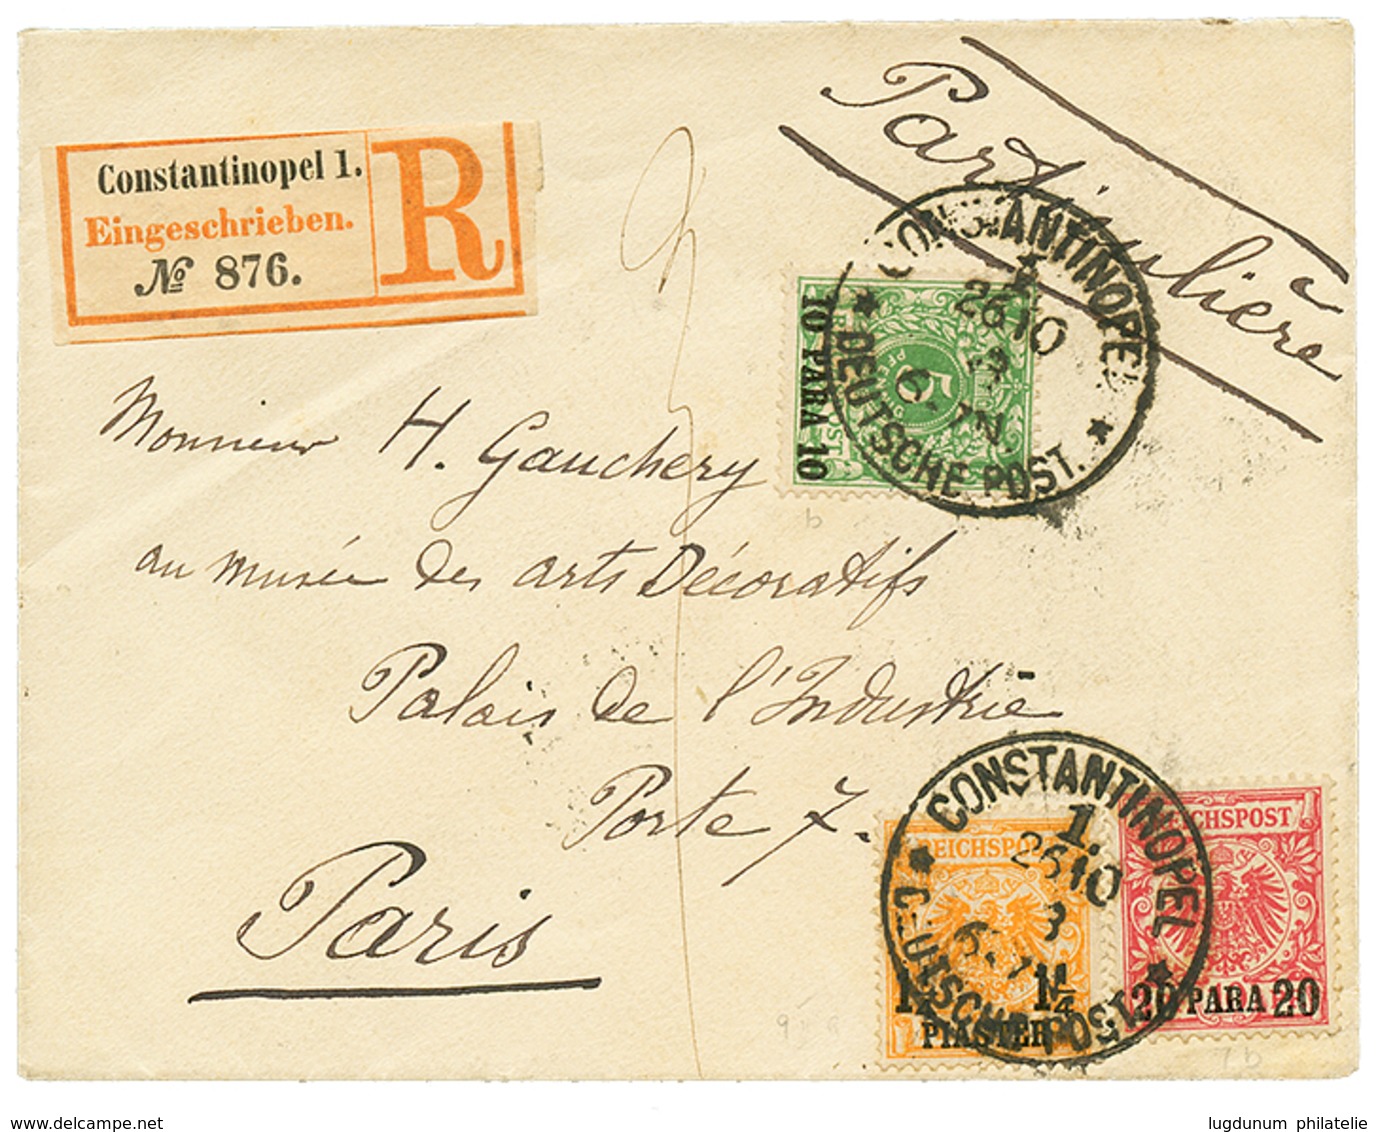 1134 1893 10p + 20p+ 1 1/4P Canc. CONSTANTINOPEL On REGISTERED Envelope To FRANCE. Signed JASCHKE. Vf. - Turquie (bureaux)